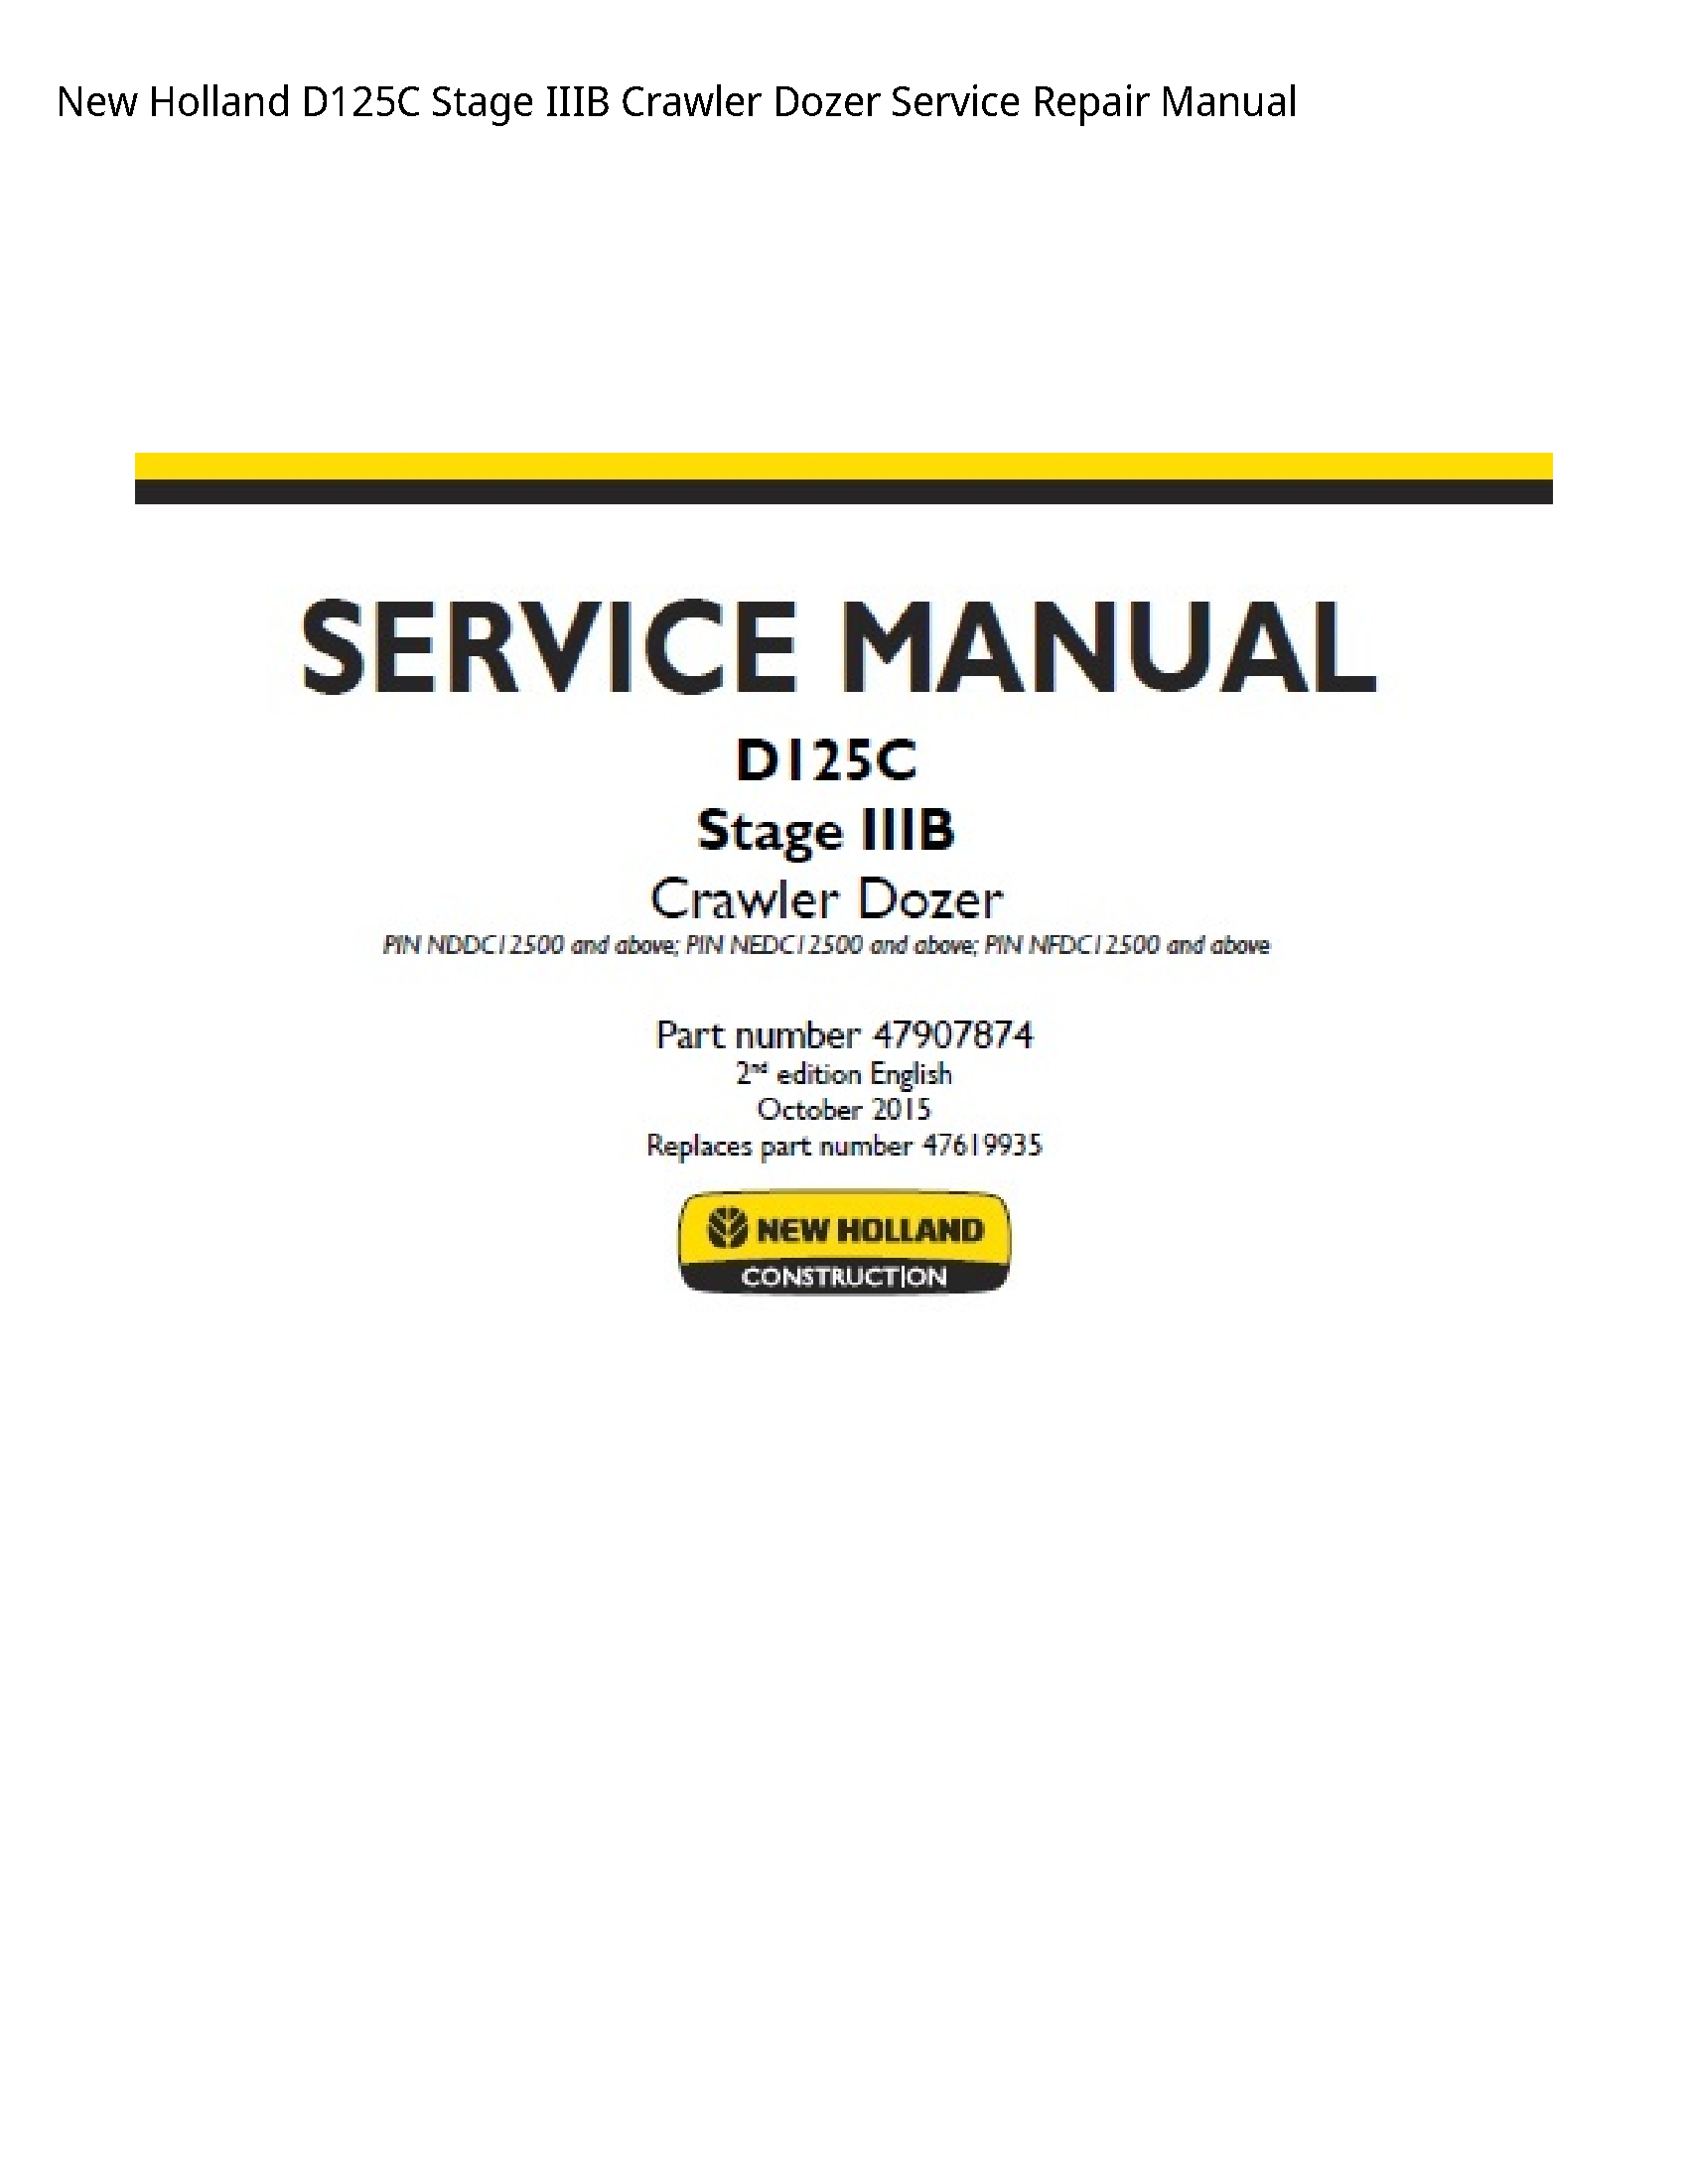 New Holland D125C Stage IIIB Crawler Dozer manual